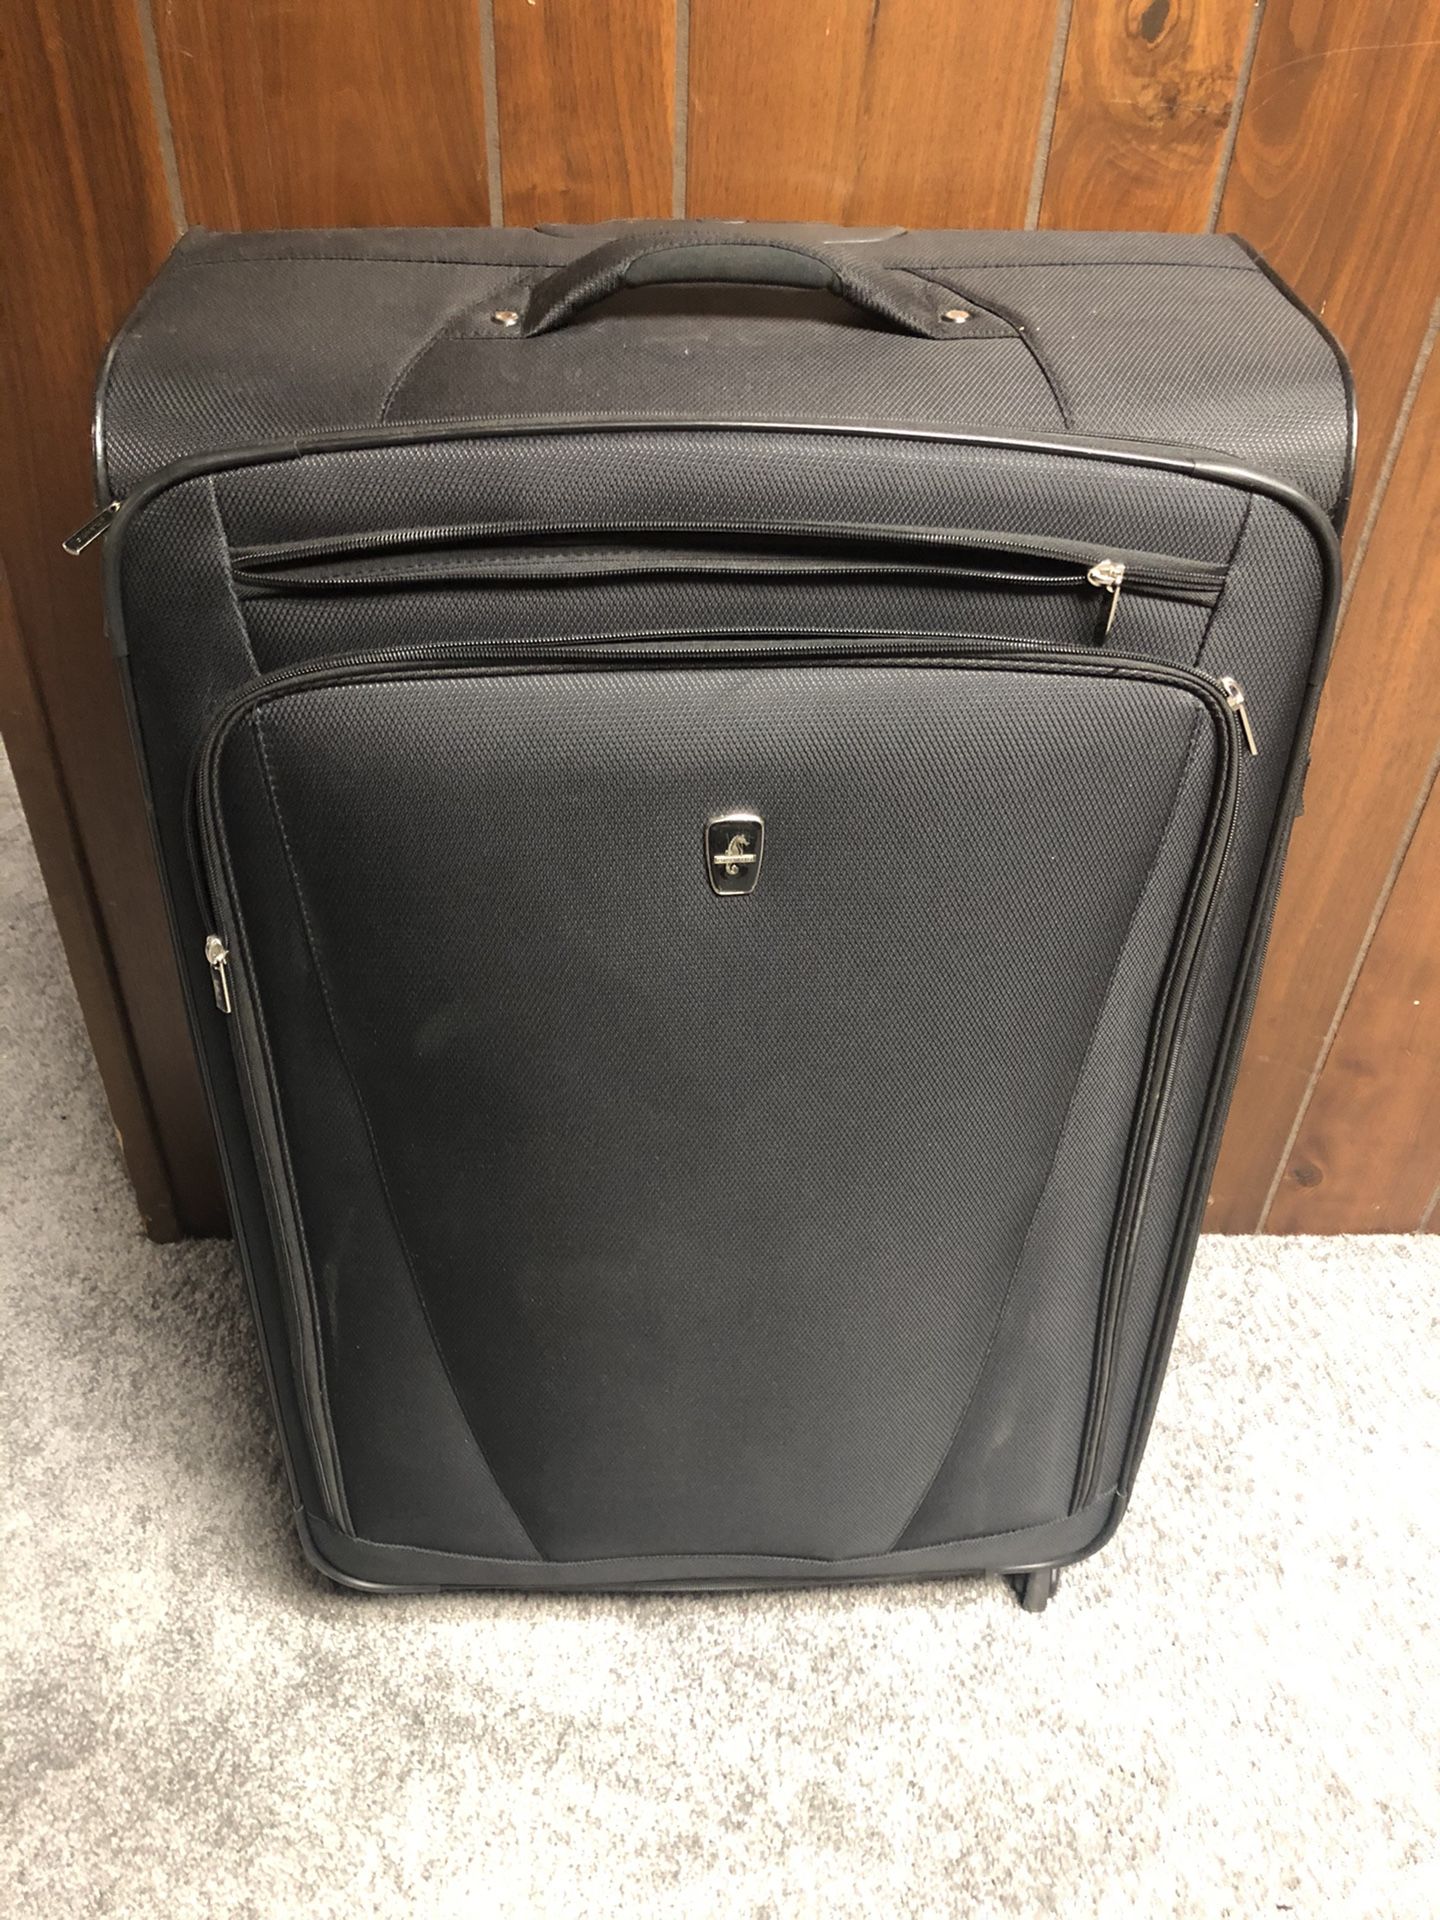 Xtra large spinner luggage